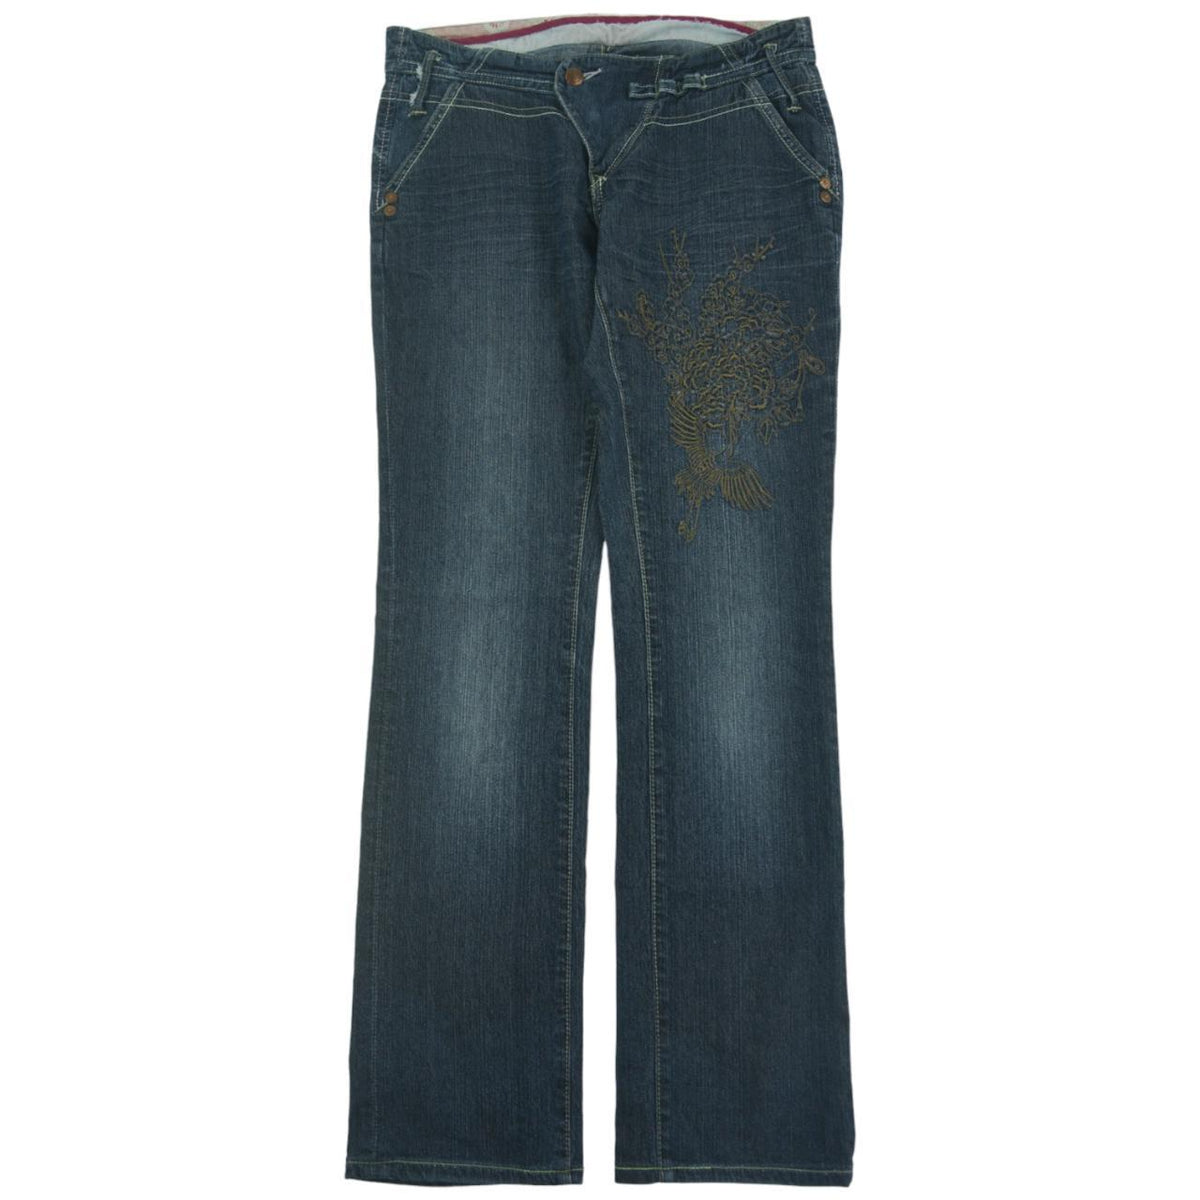 Vintage Evisu Japanese Denim Jeans Size W27